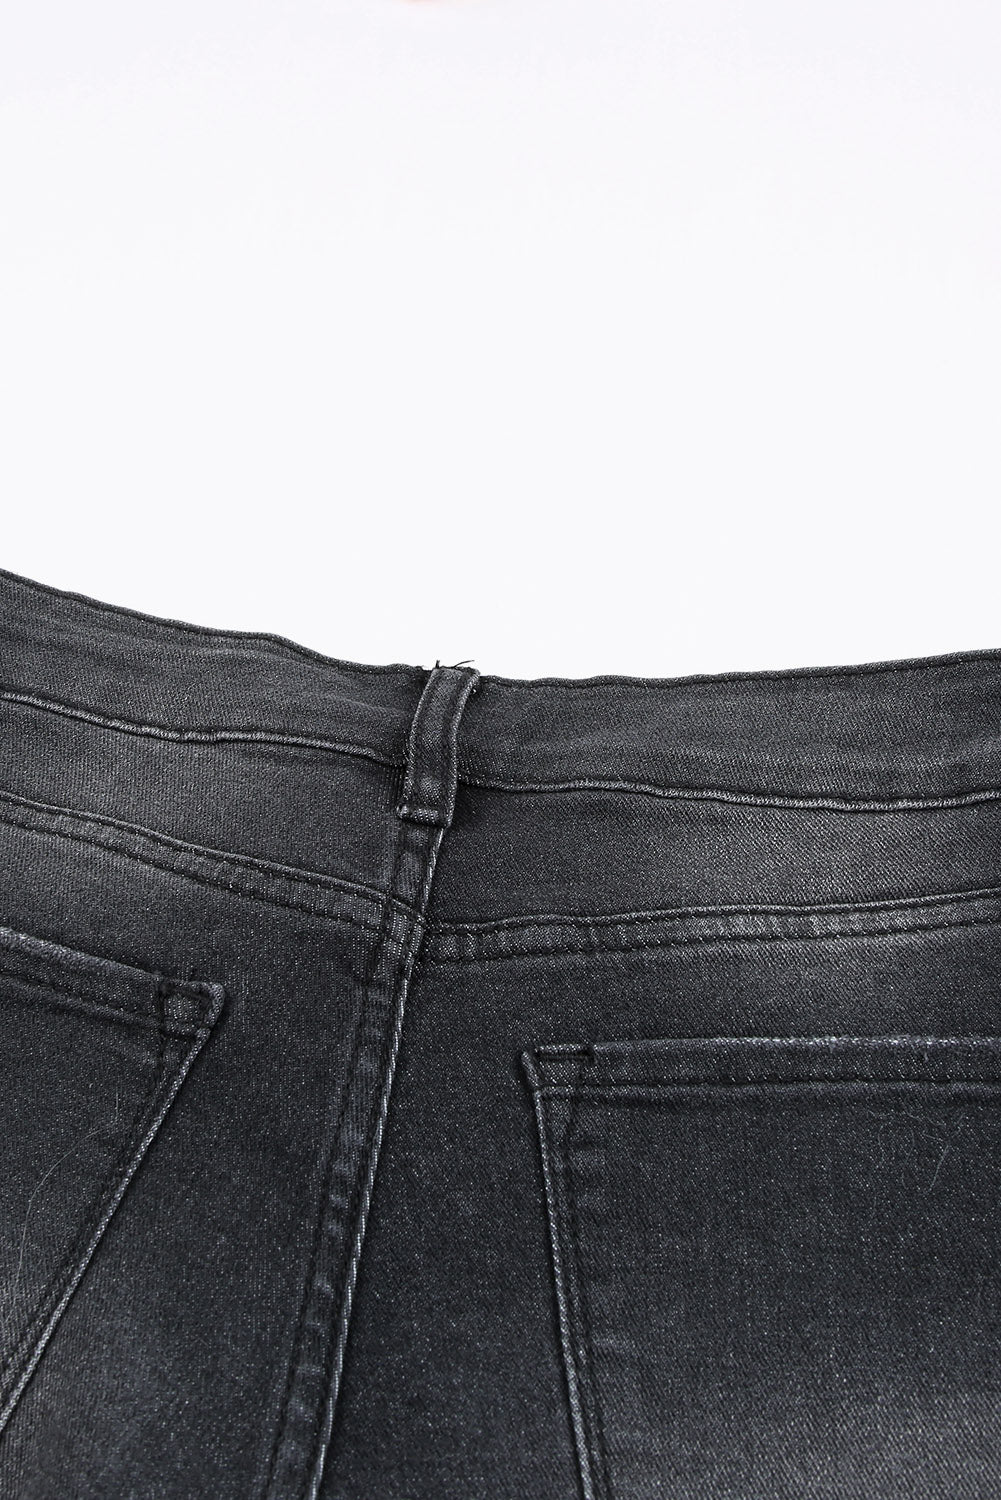 Black Frayed Distressed Denim Shorts